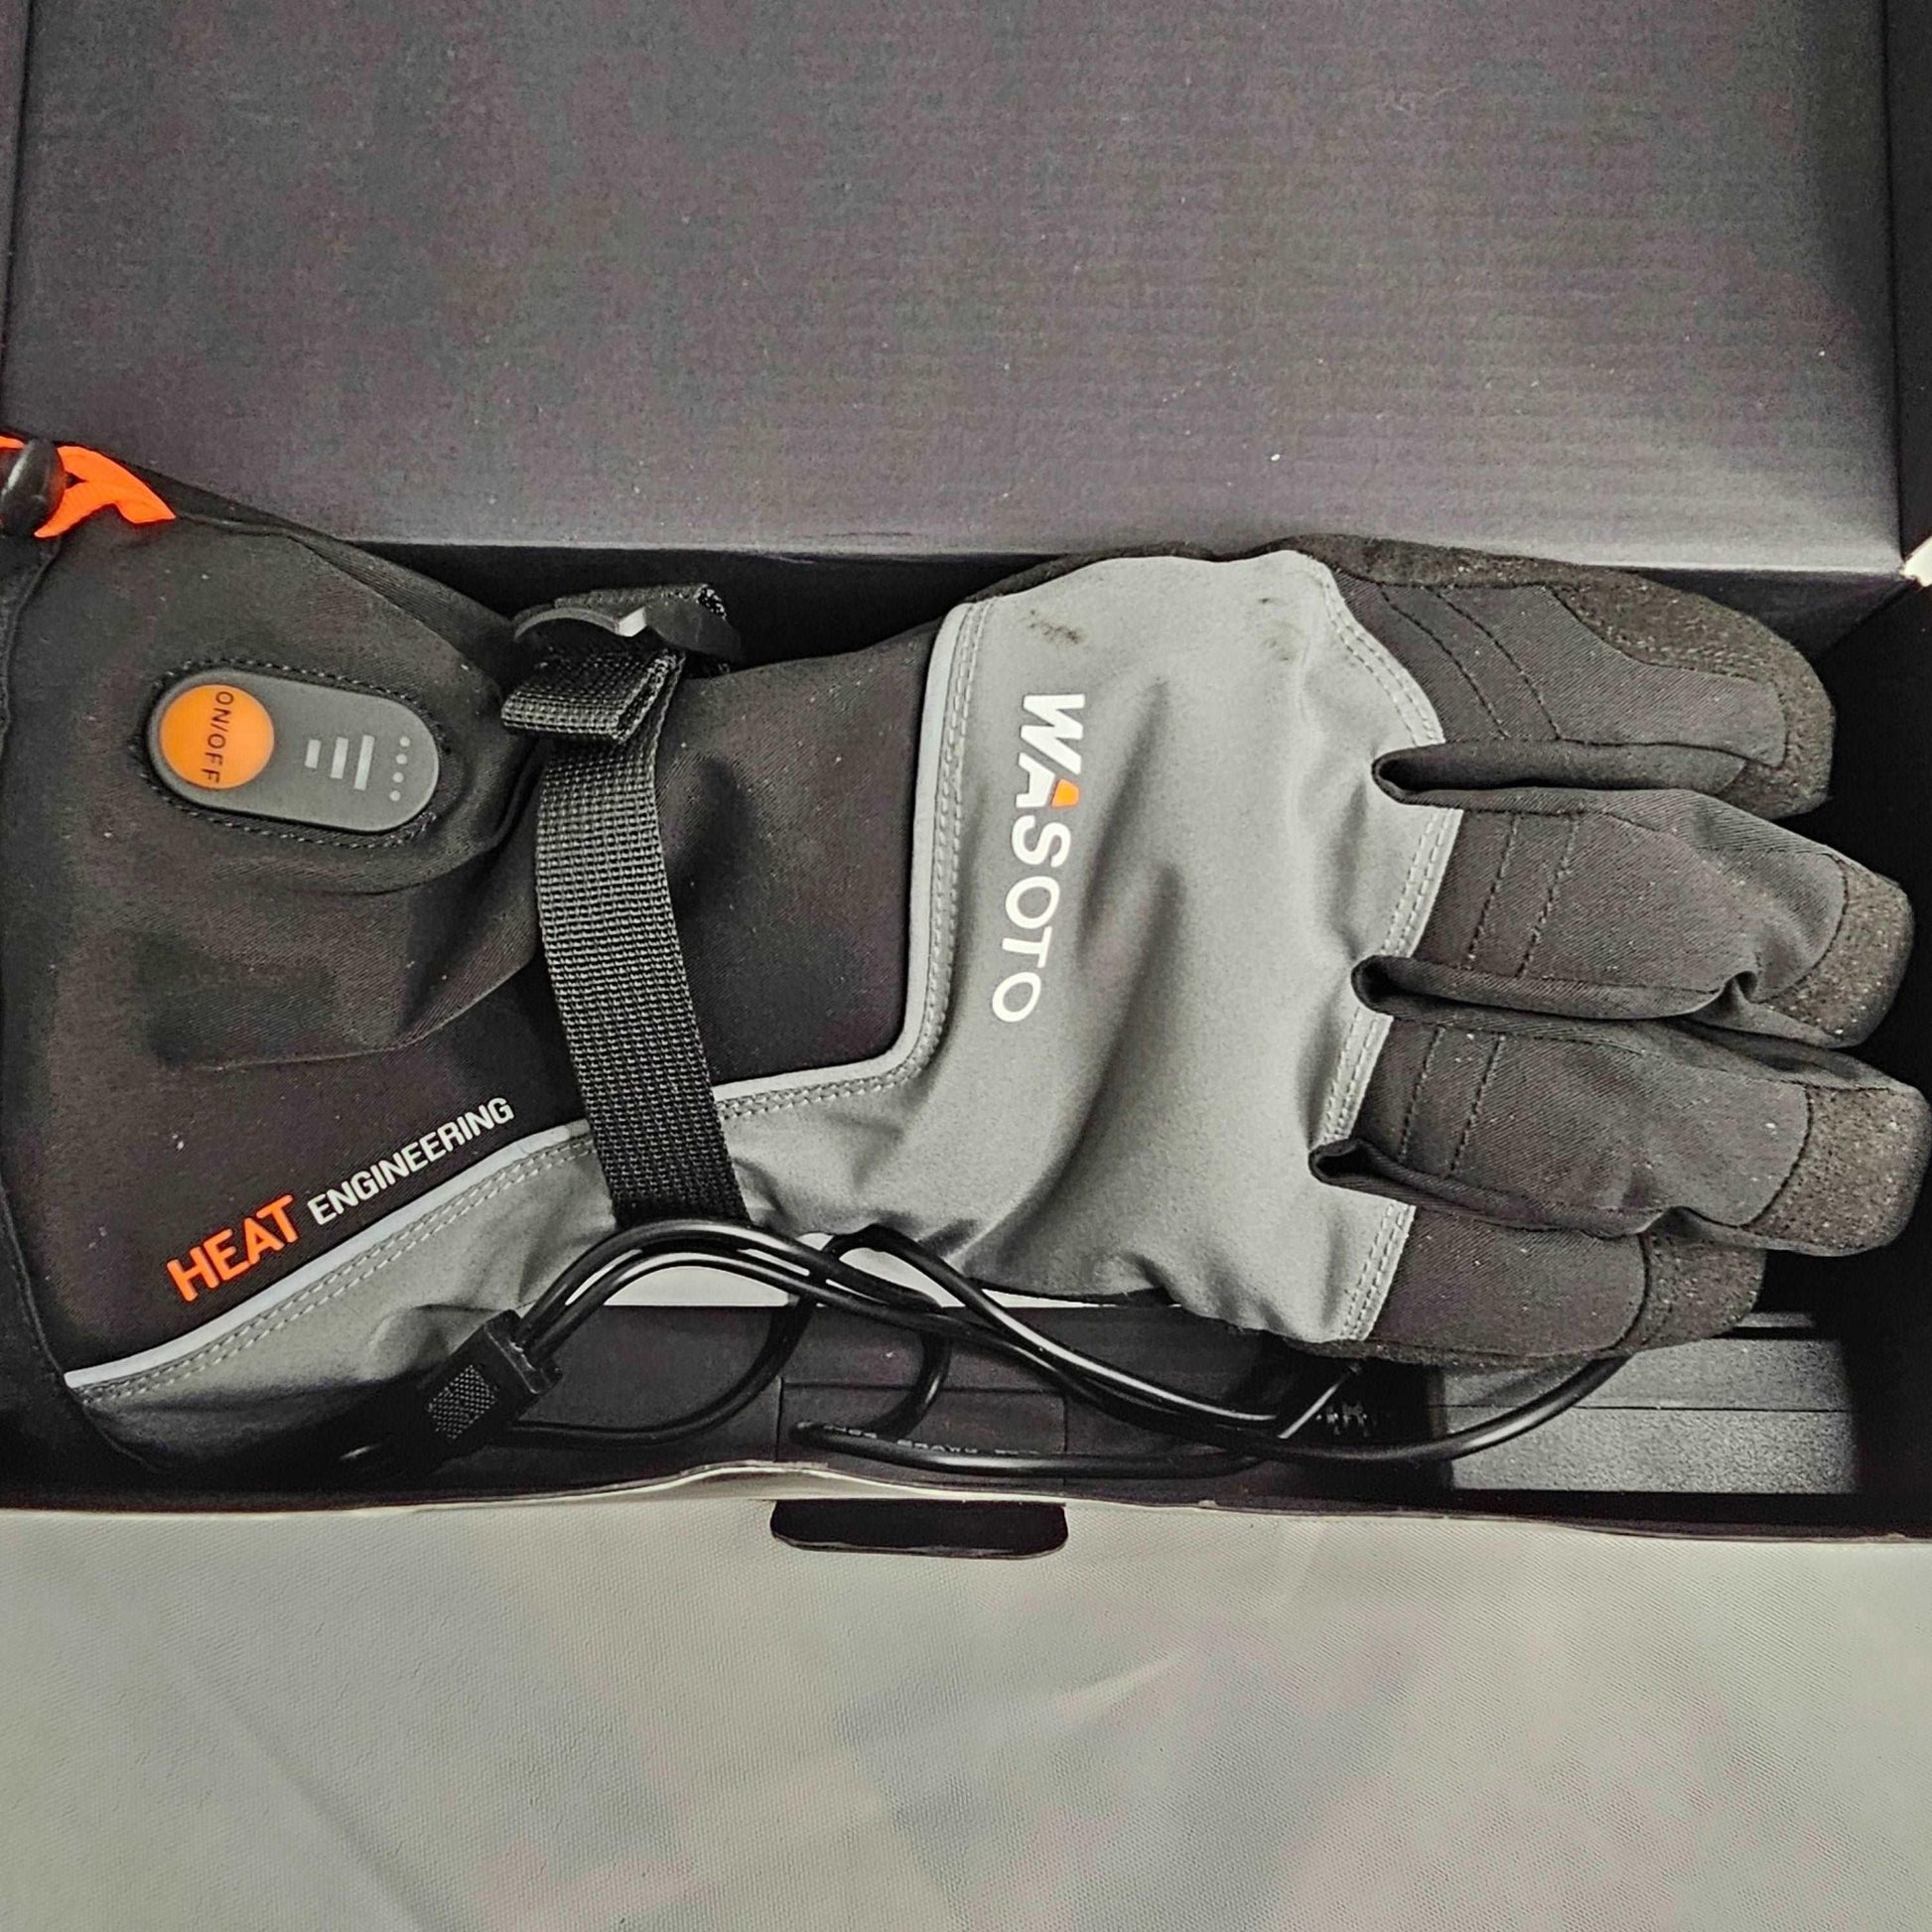 Heated Gloves - Grey/Black, Medium Size, Versatile Outdoor Use - DQ Distribution